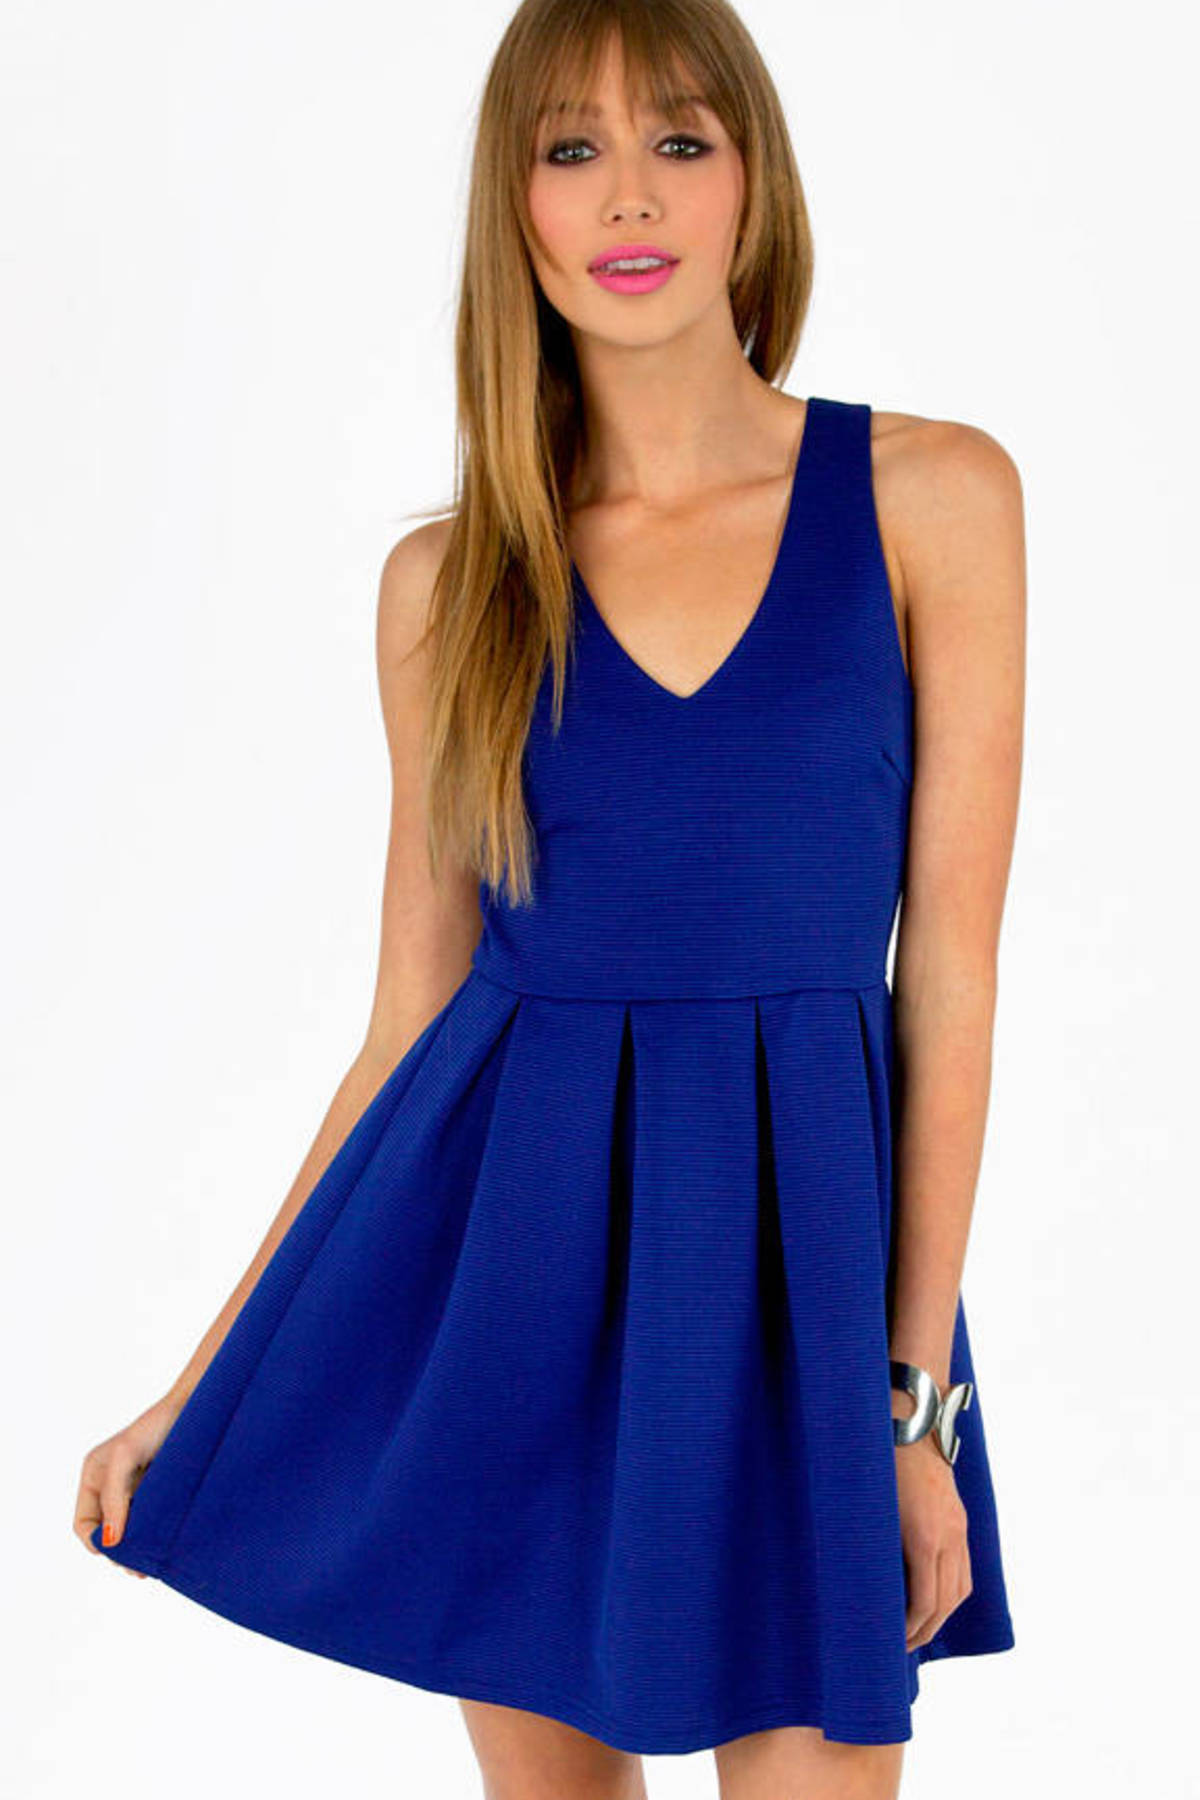 Isabelle V- Neck Skater Dress in Blue - $23 | Tobi US